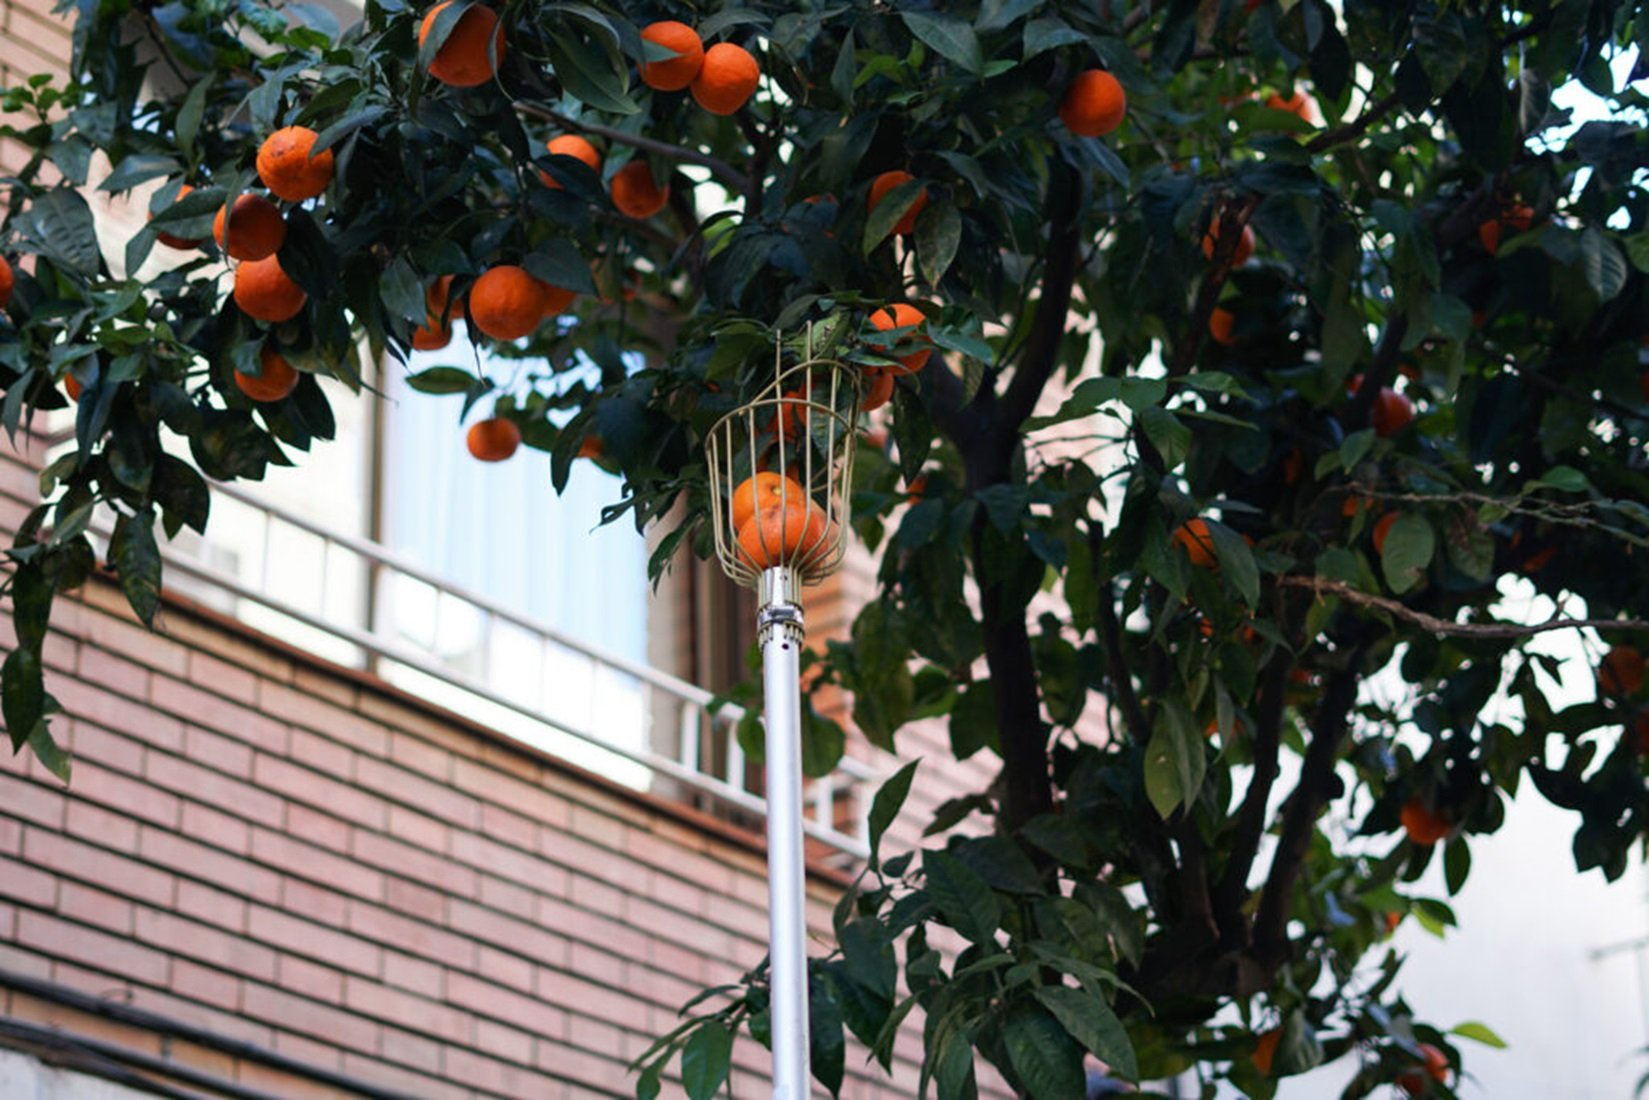 Seis distritos de Barcelona espigarán naranjas amargas para hacer mermelada